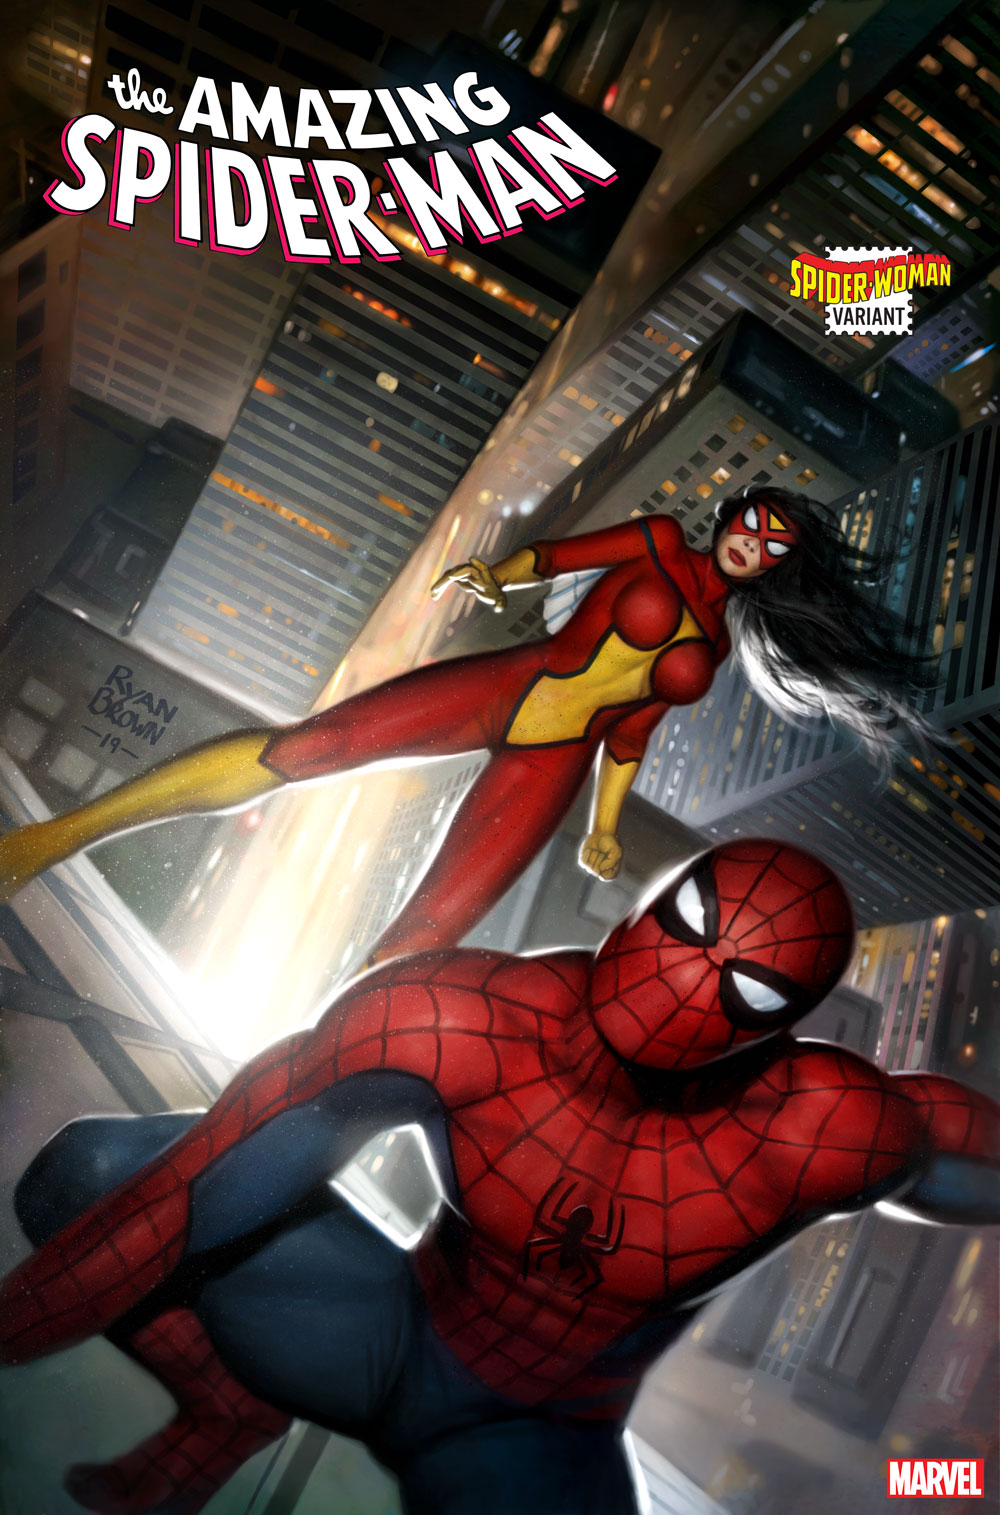 Spider-Woman variants